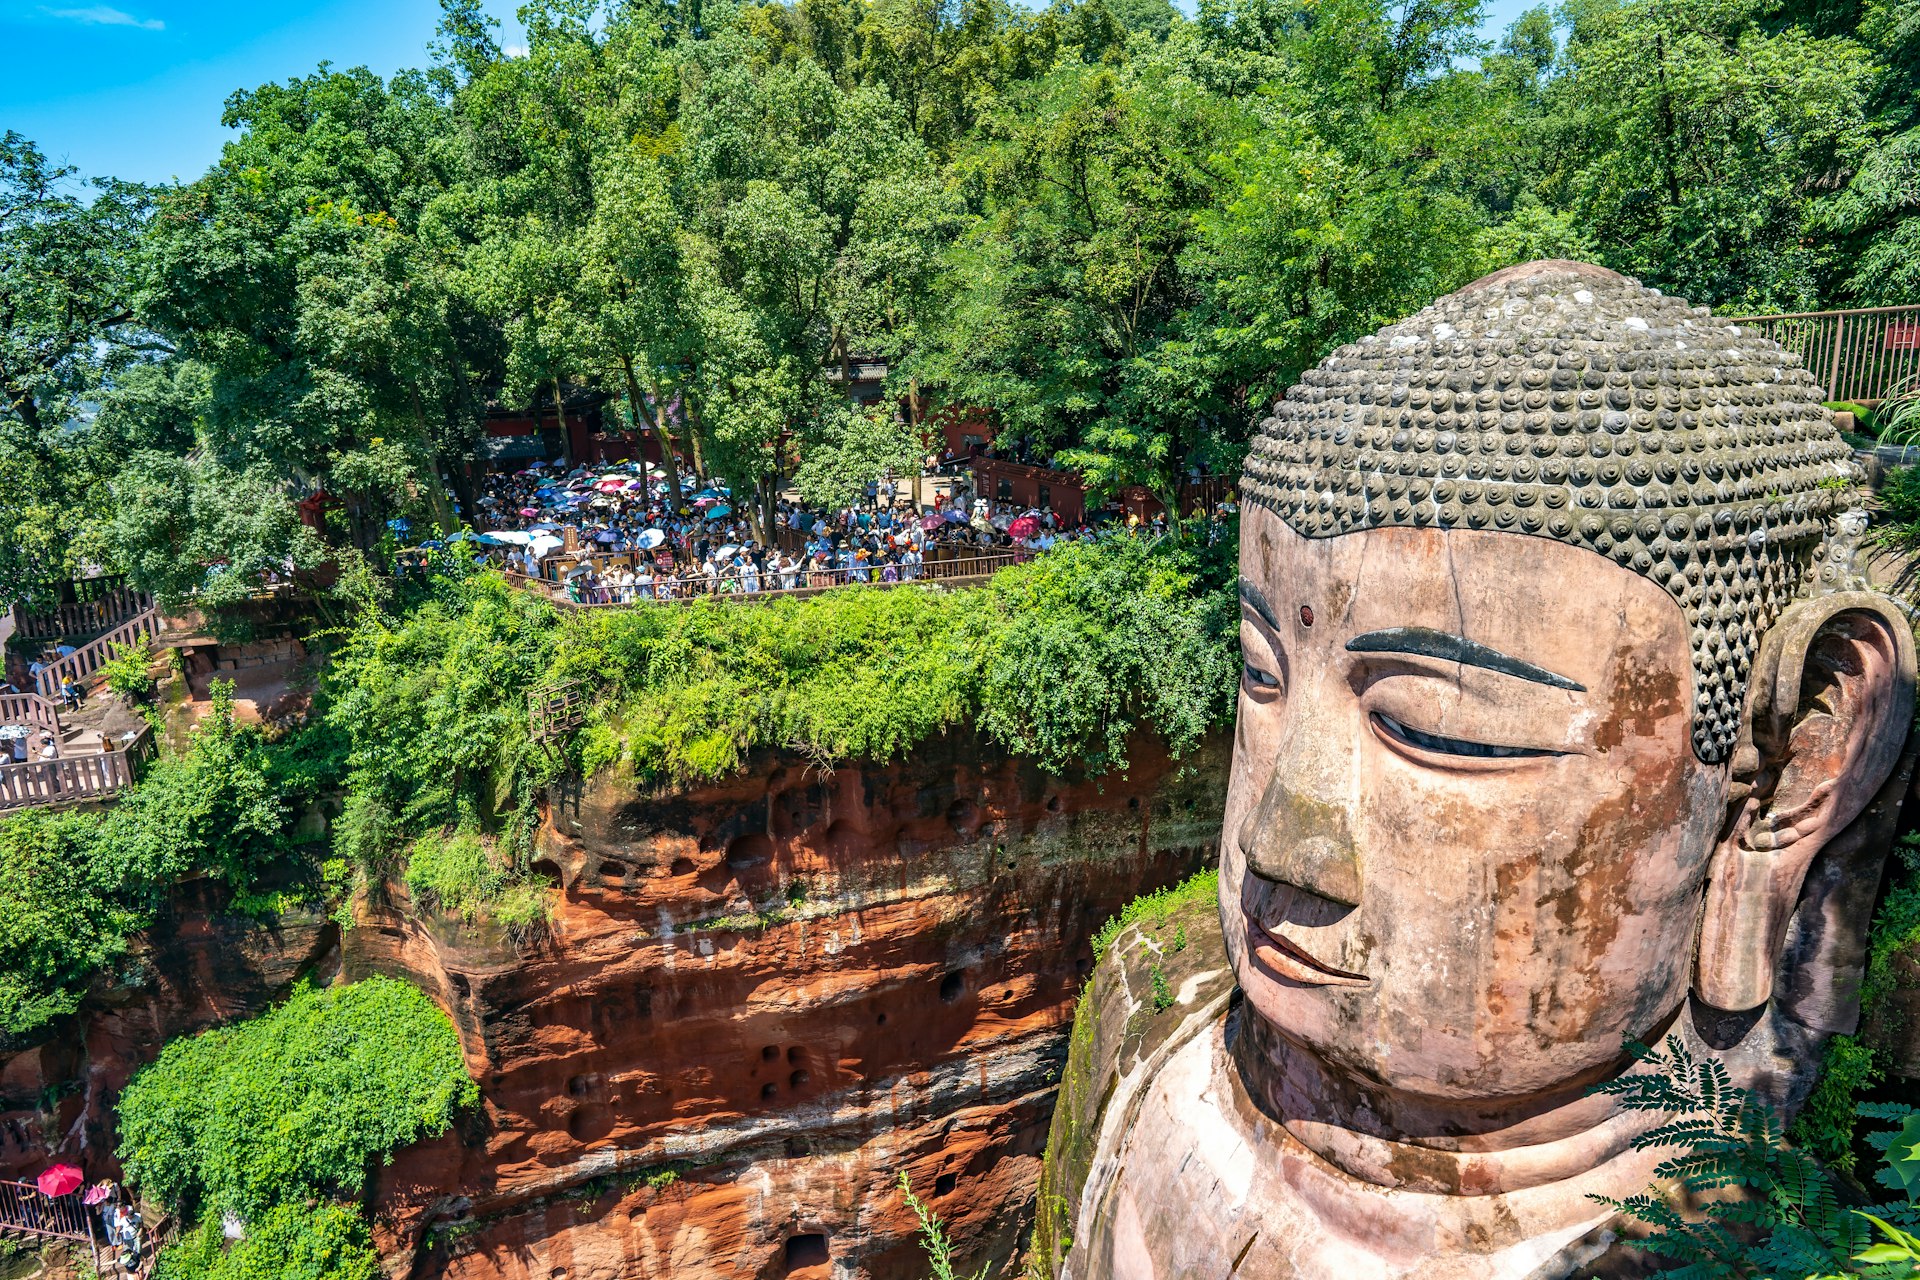 The head of the Le Shan Buddha